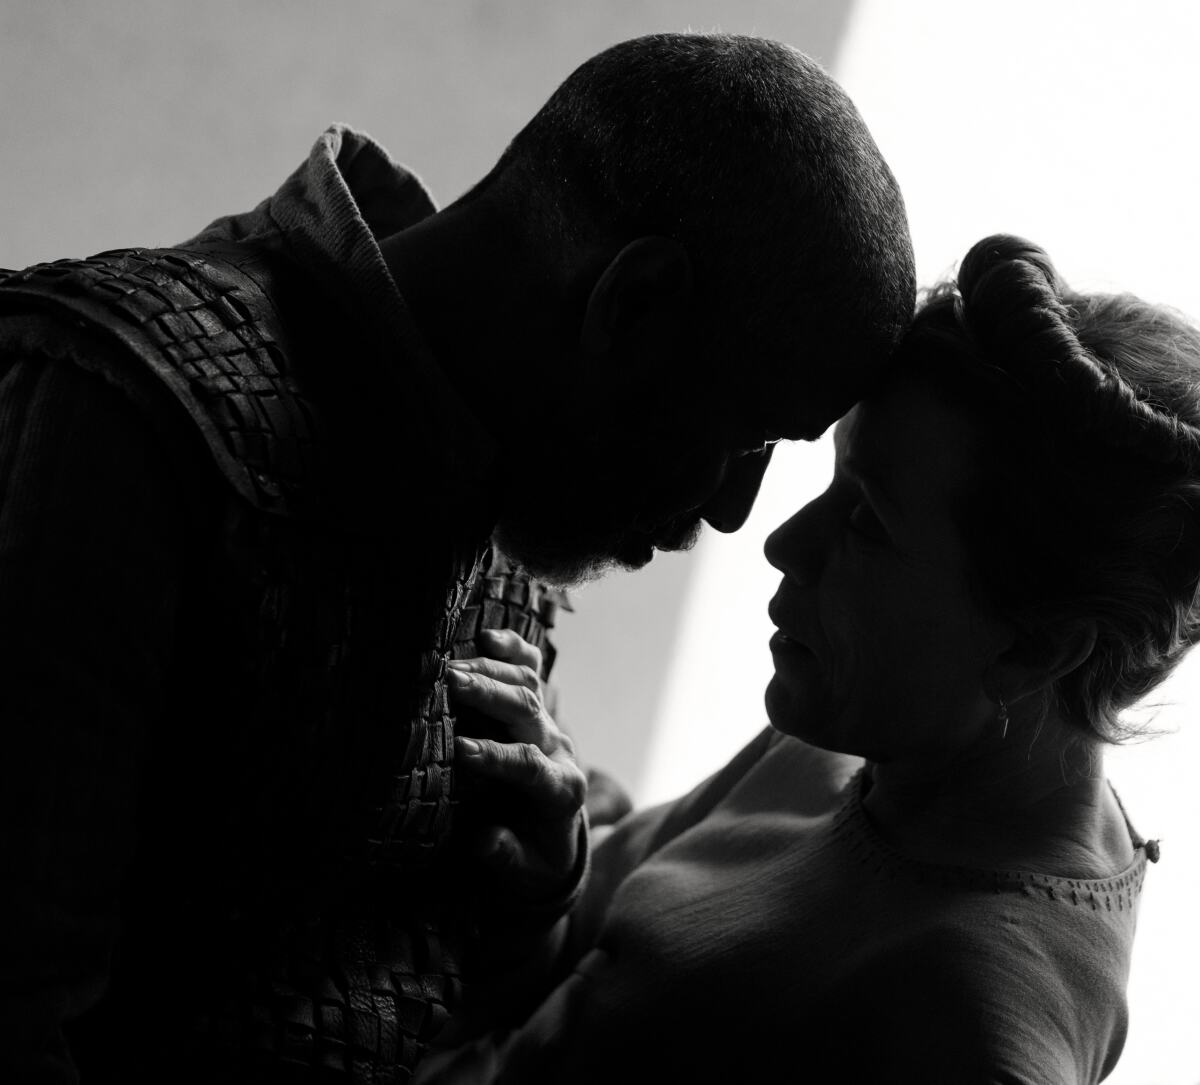 Denzel Washington and Frances McDormand star in "The Tragedy of Macbeth."